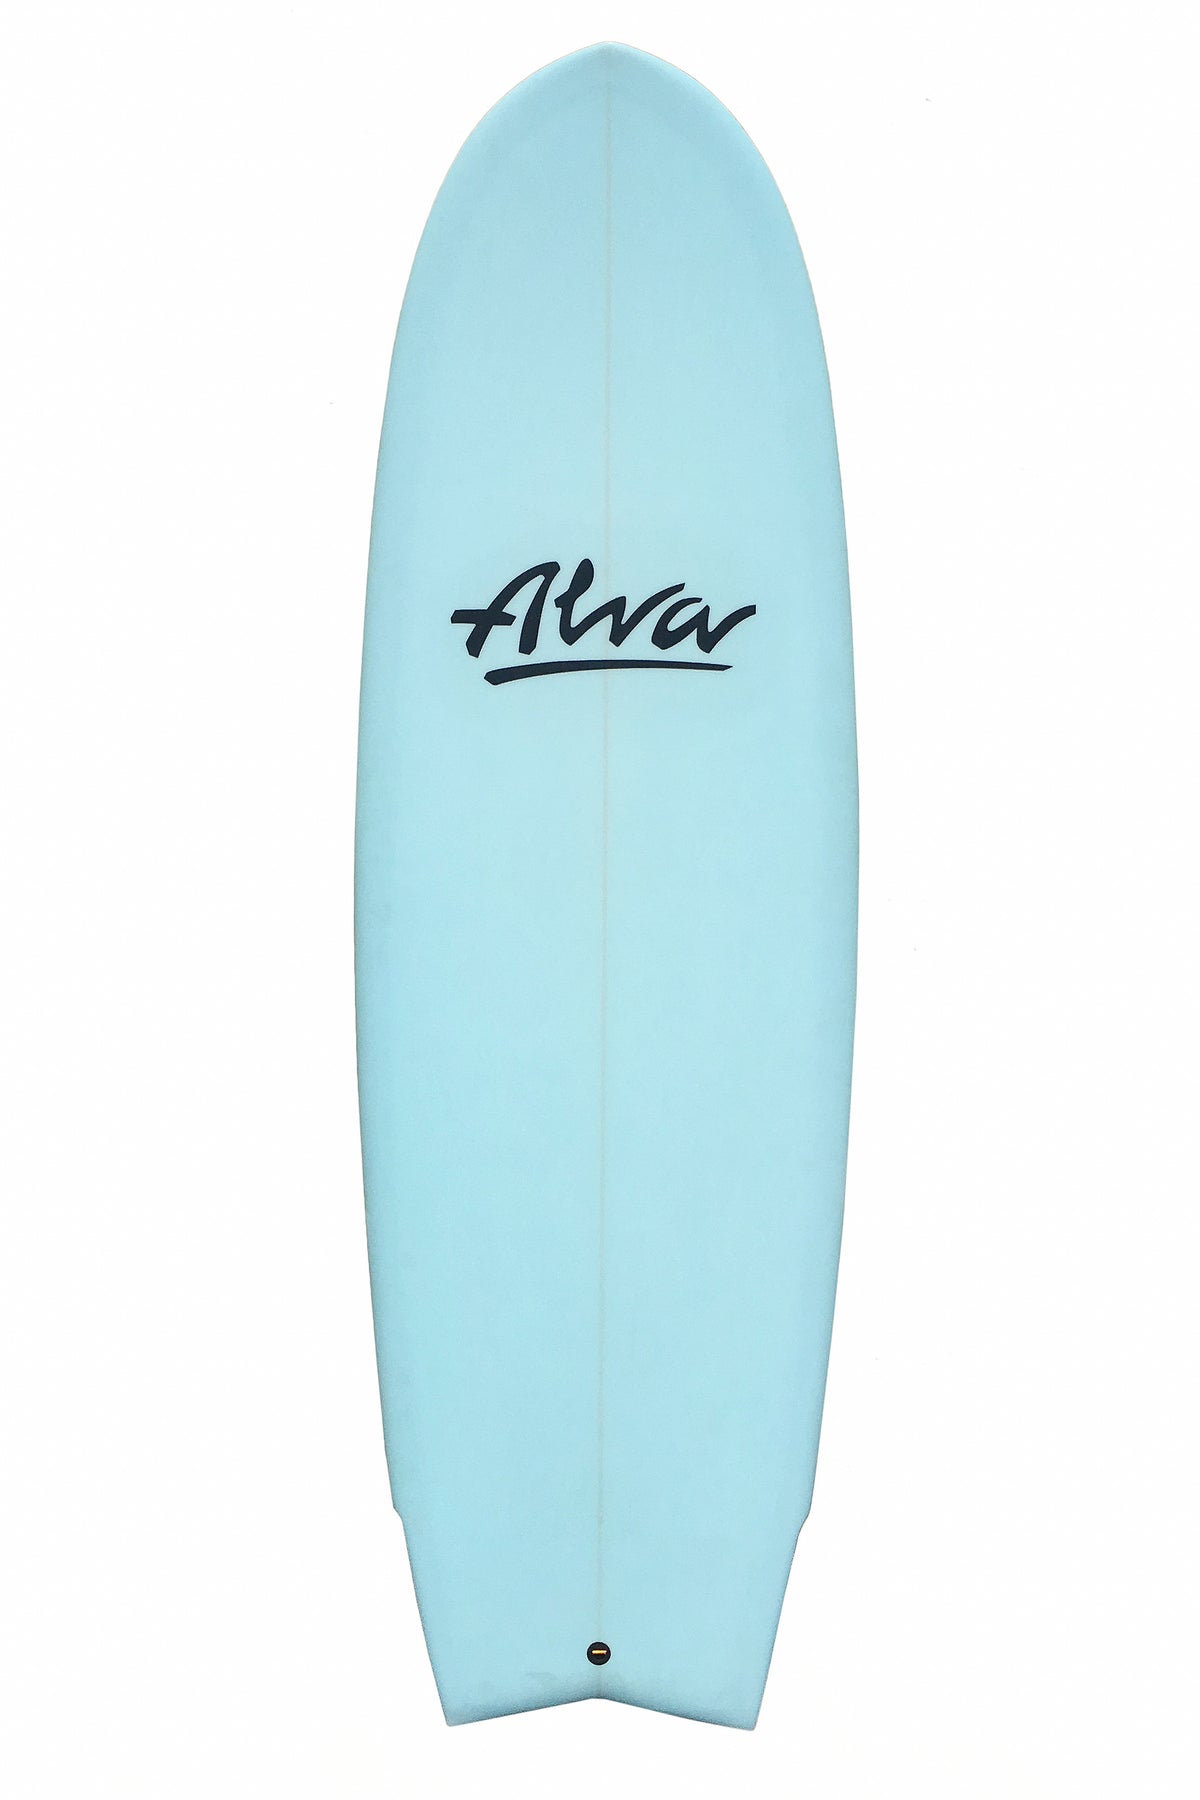 ALVA SKY BLUE EDGE SURFBOARD